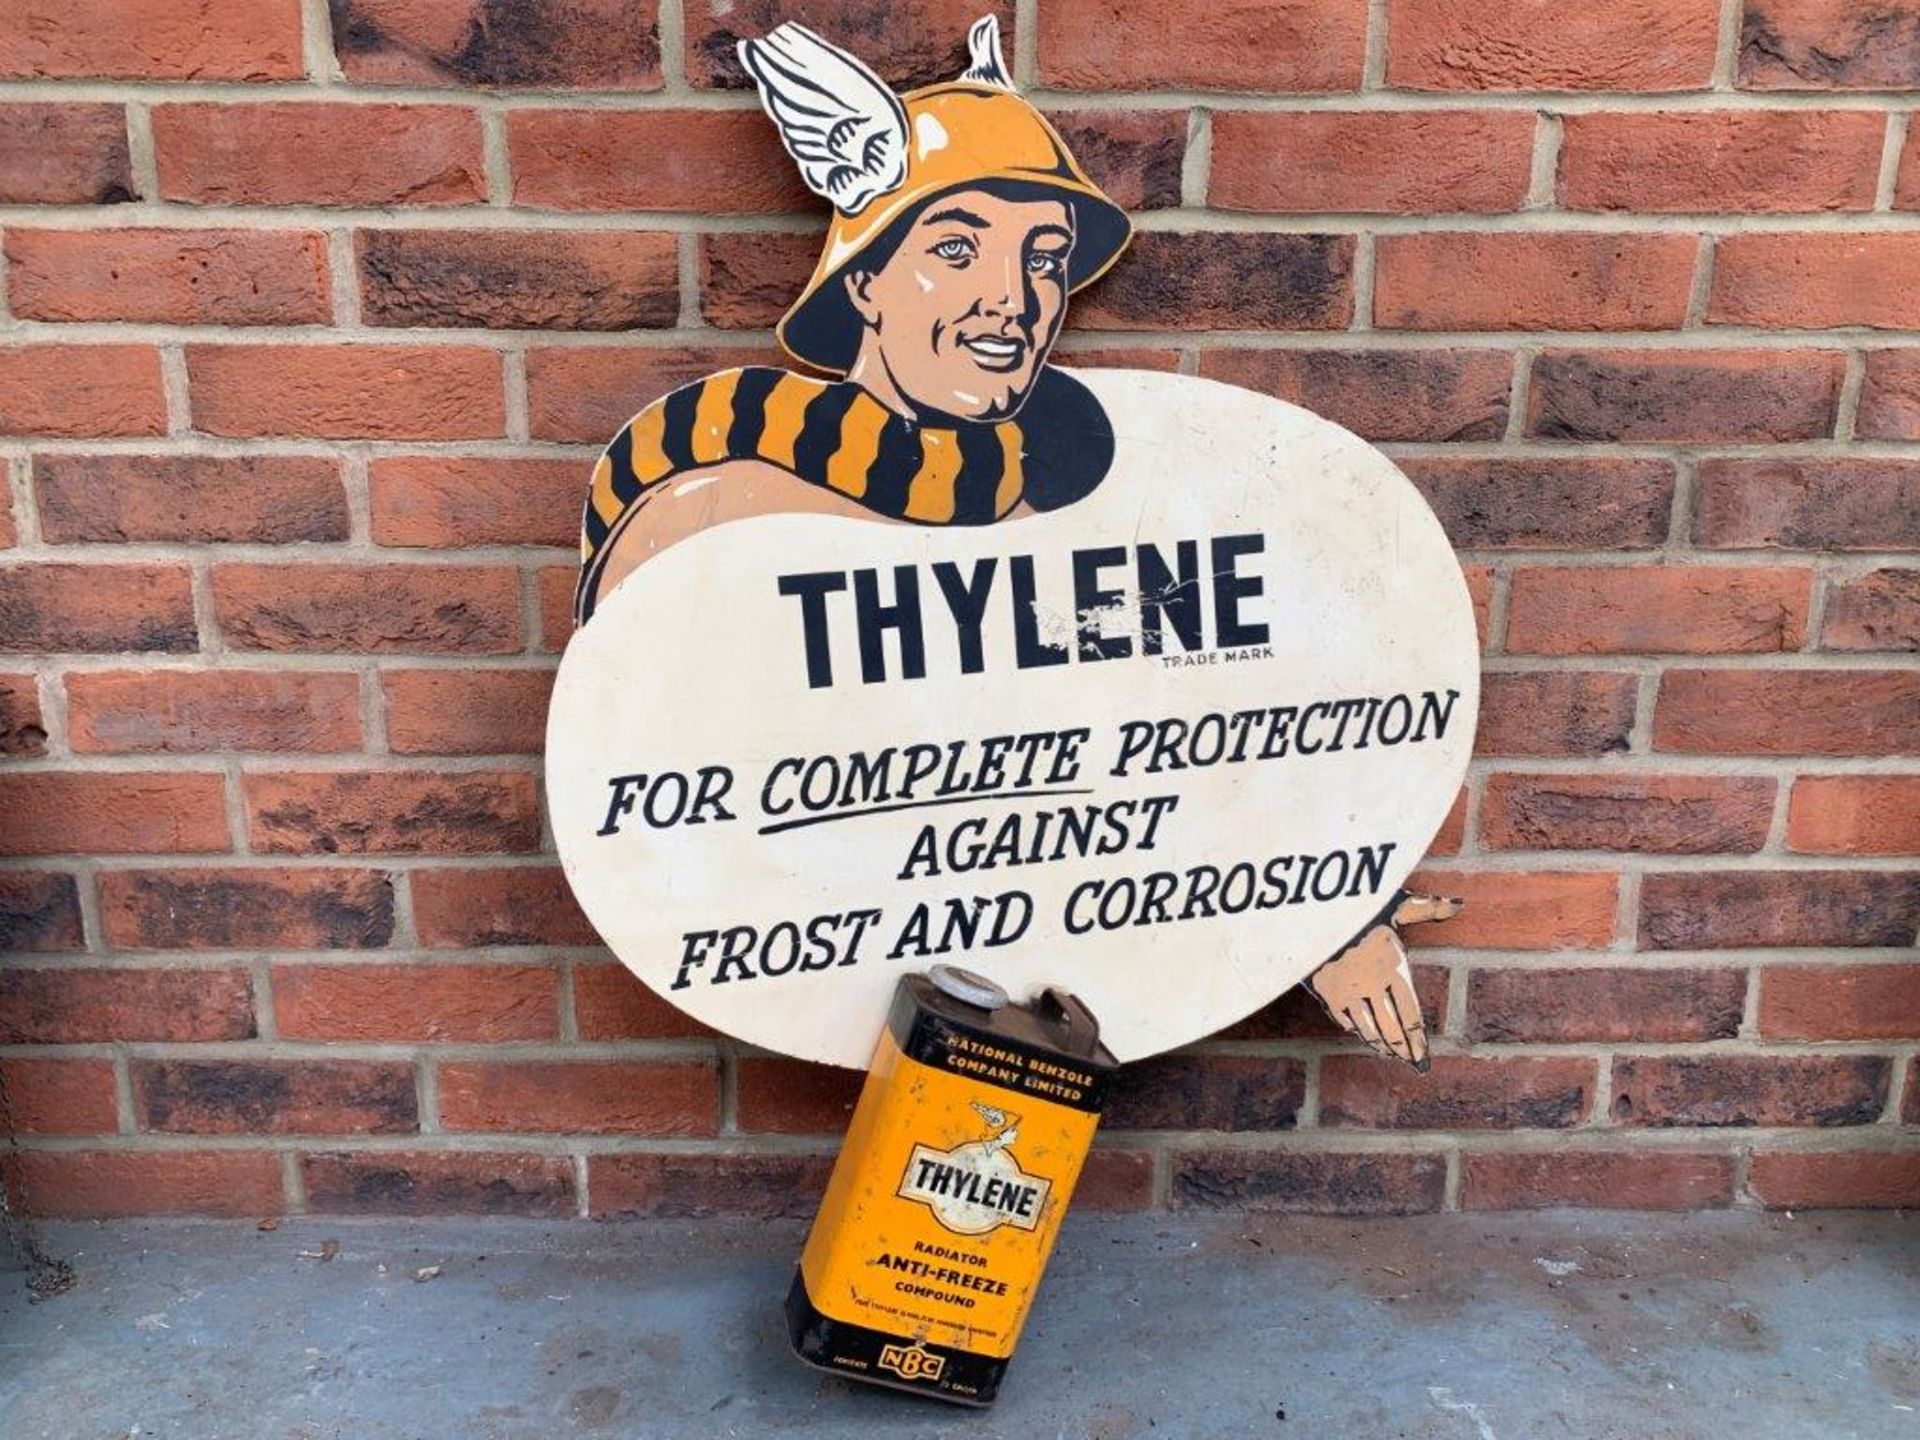 Original Thylene Anti-Freeze Advertising Board & Can